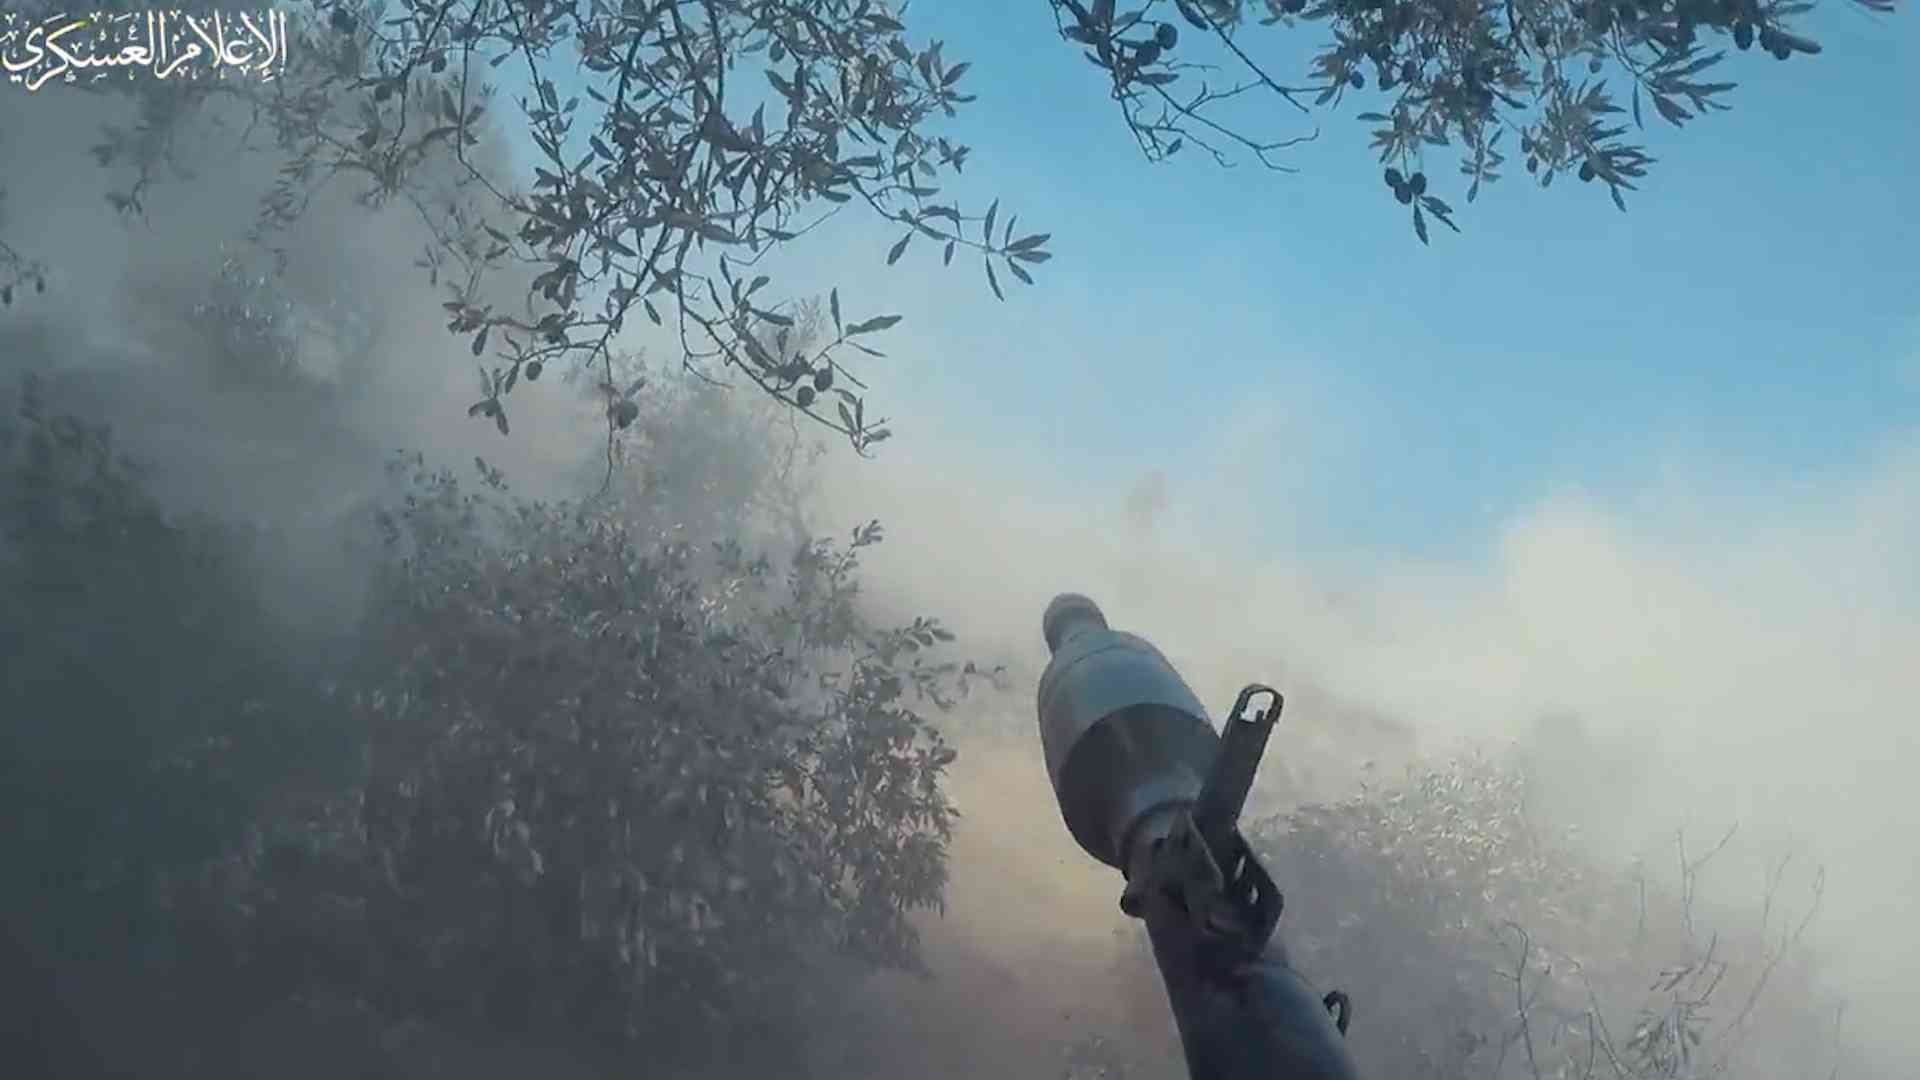 مشهد خيالي.. ماذا يعني وصول جندي قسامي لدبابة ميركافا 4 وتفجيرها؟ (فيديو)